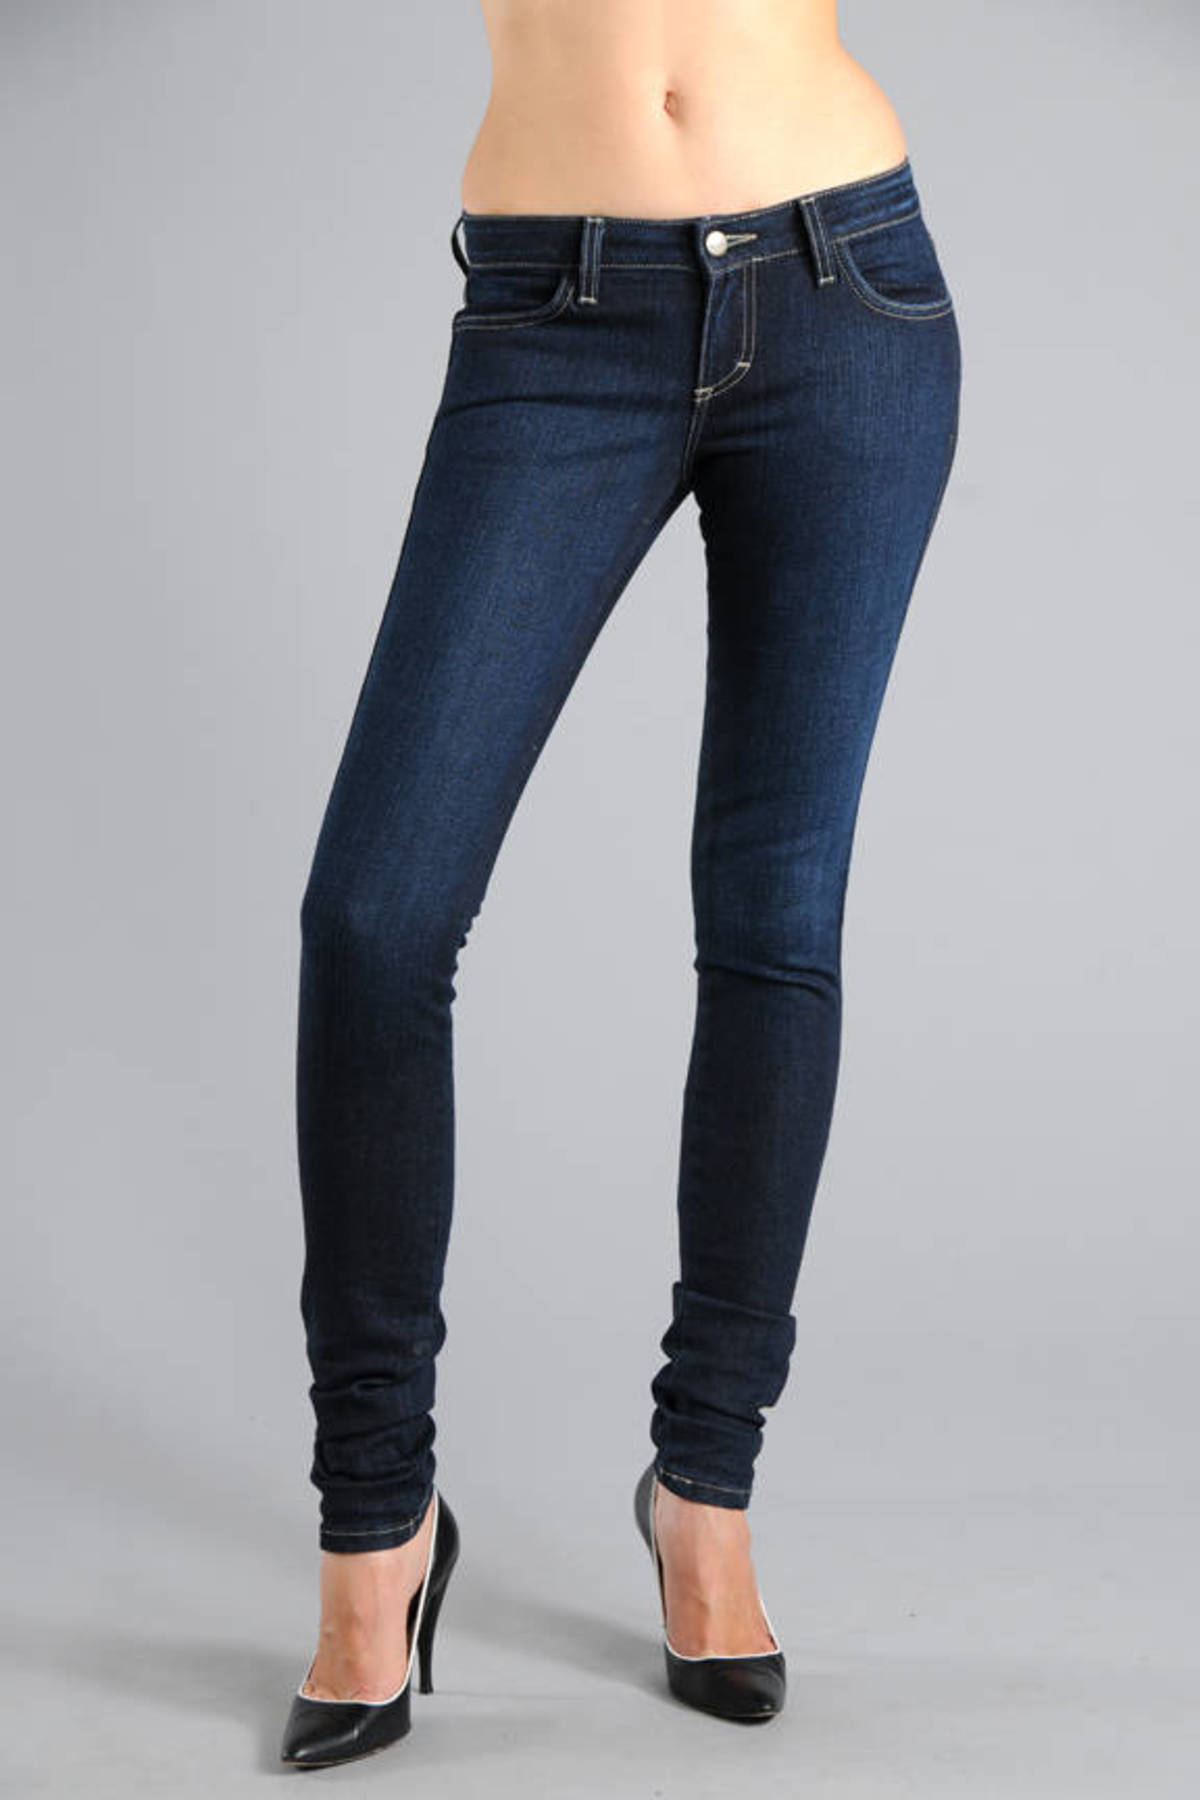 Blue Siwy Jeans - Simple Skinny Jeans - Blue Stretch Jeans